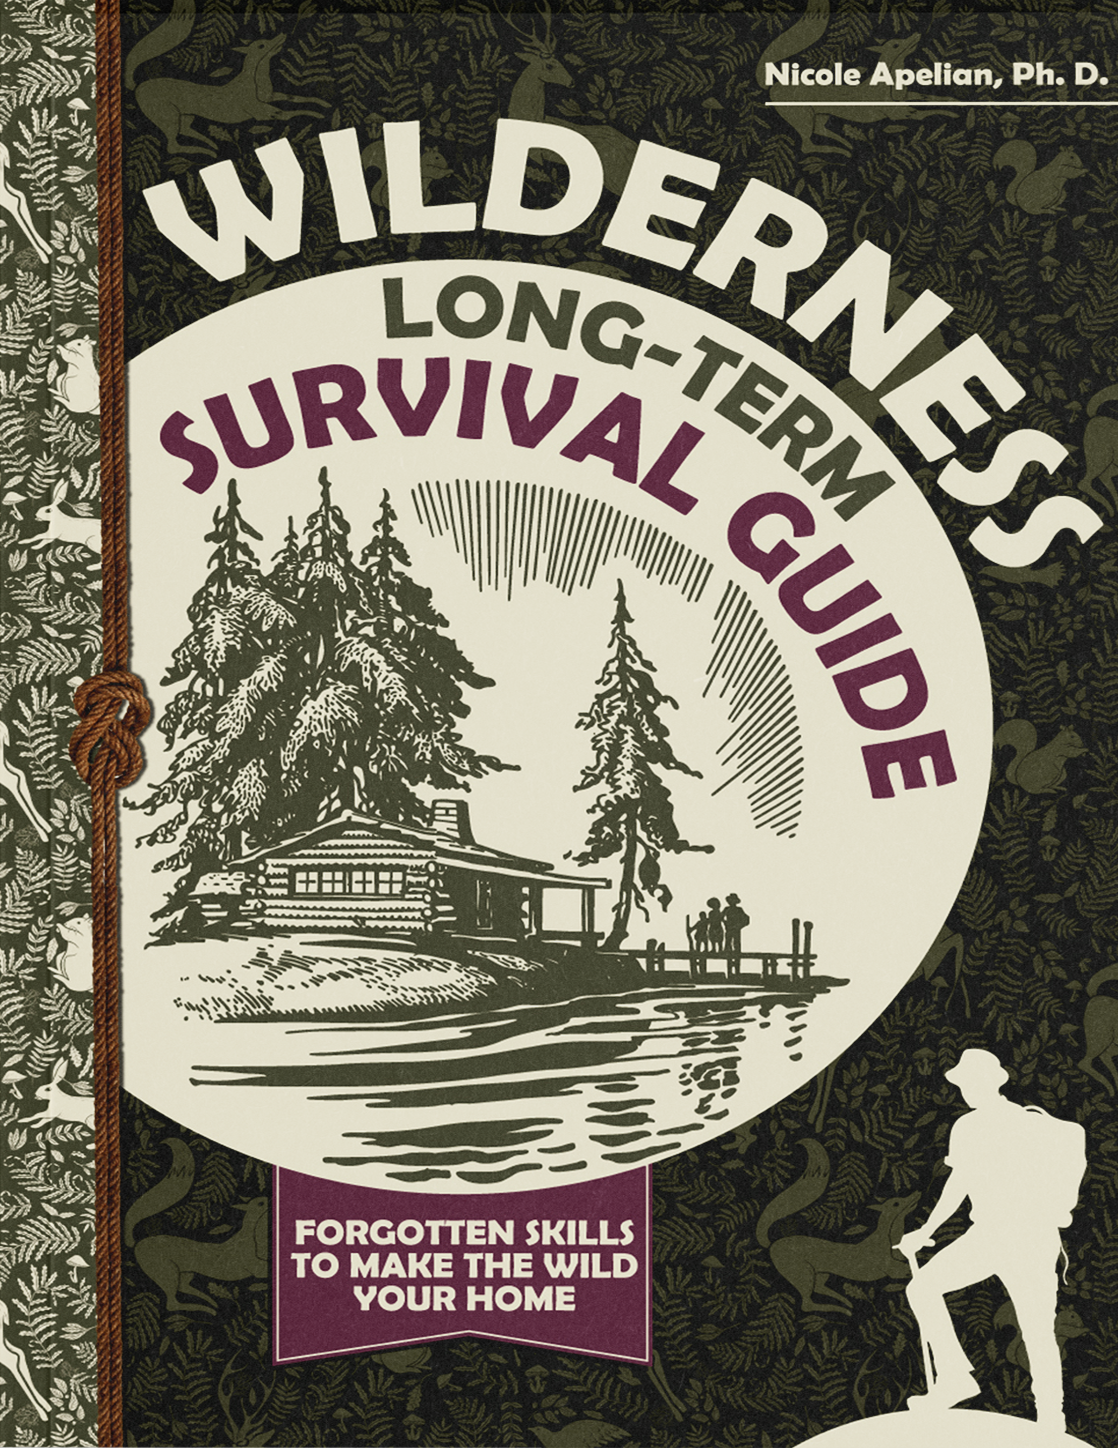 Nicole Apelian's book "Wilderness Survival Guide"